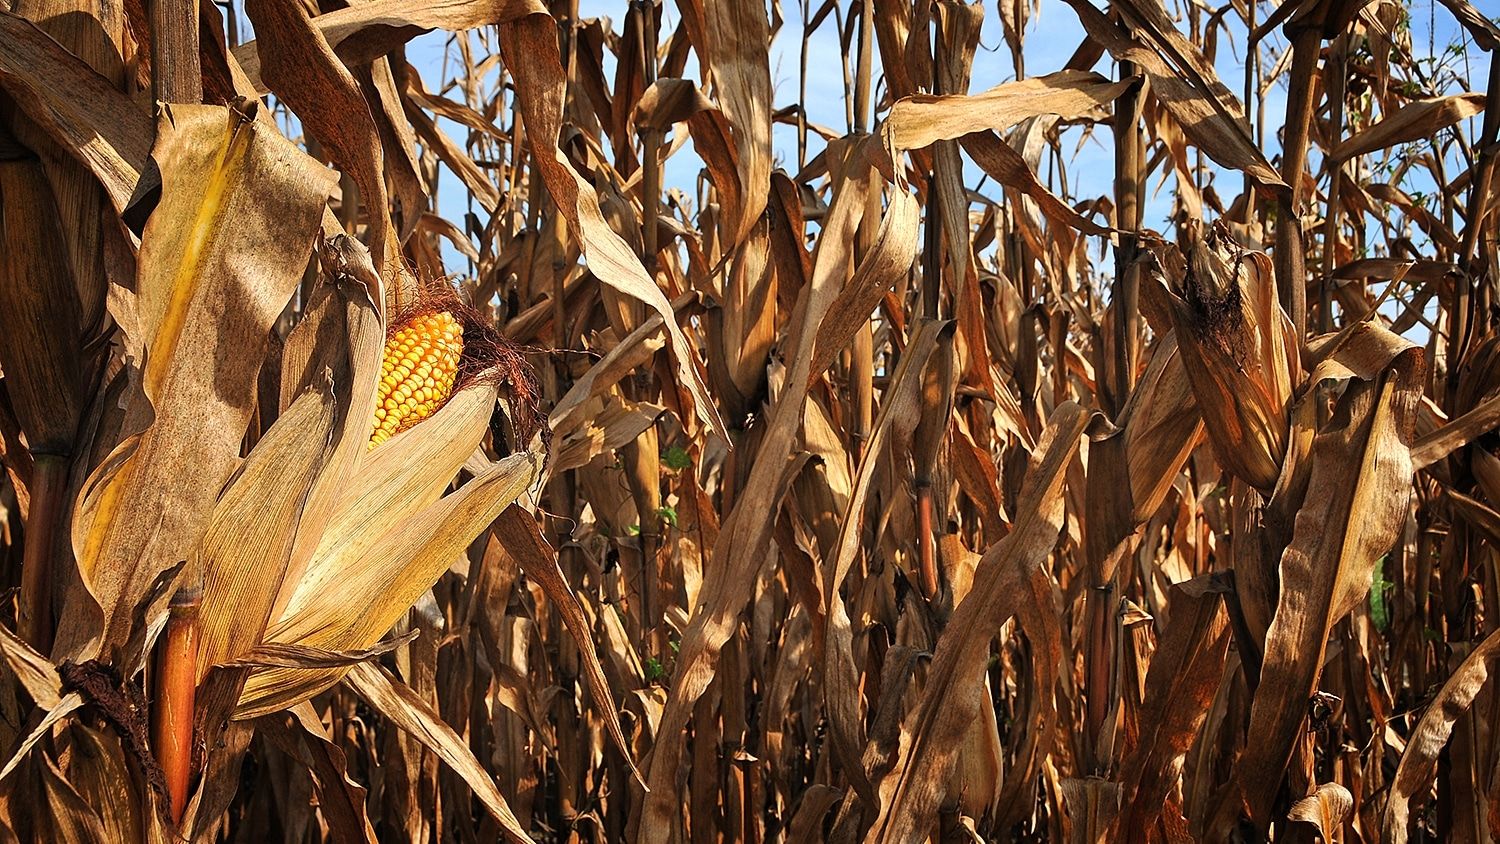 Corn on the stalk.